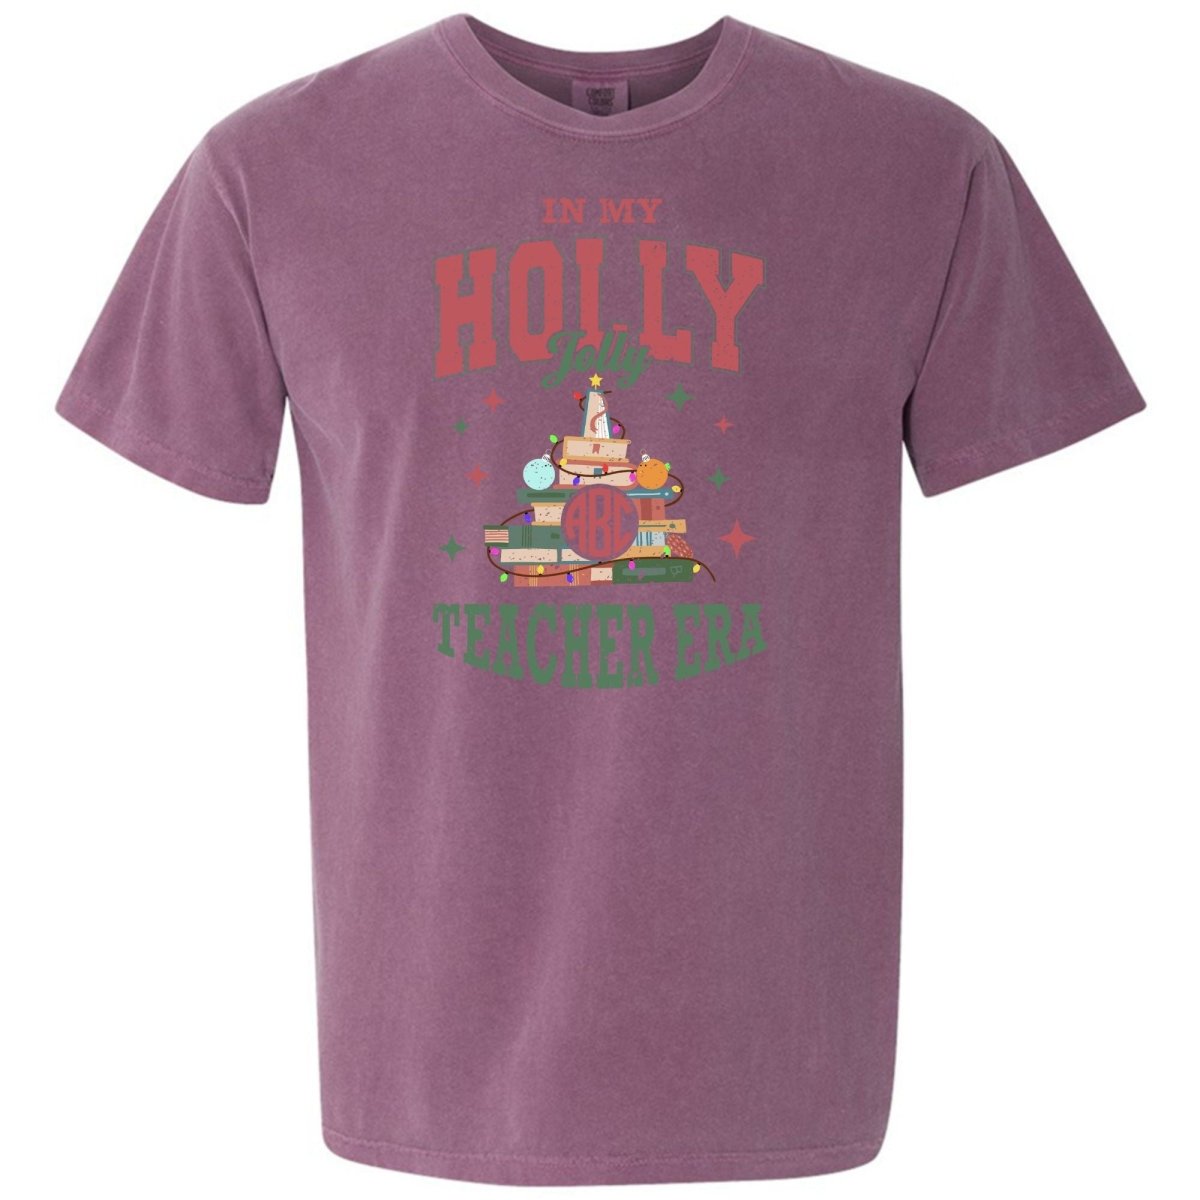 Monogrammed 'Holly Jolly Teacher Era' T - Shirt - United Monograms